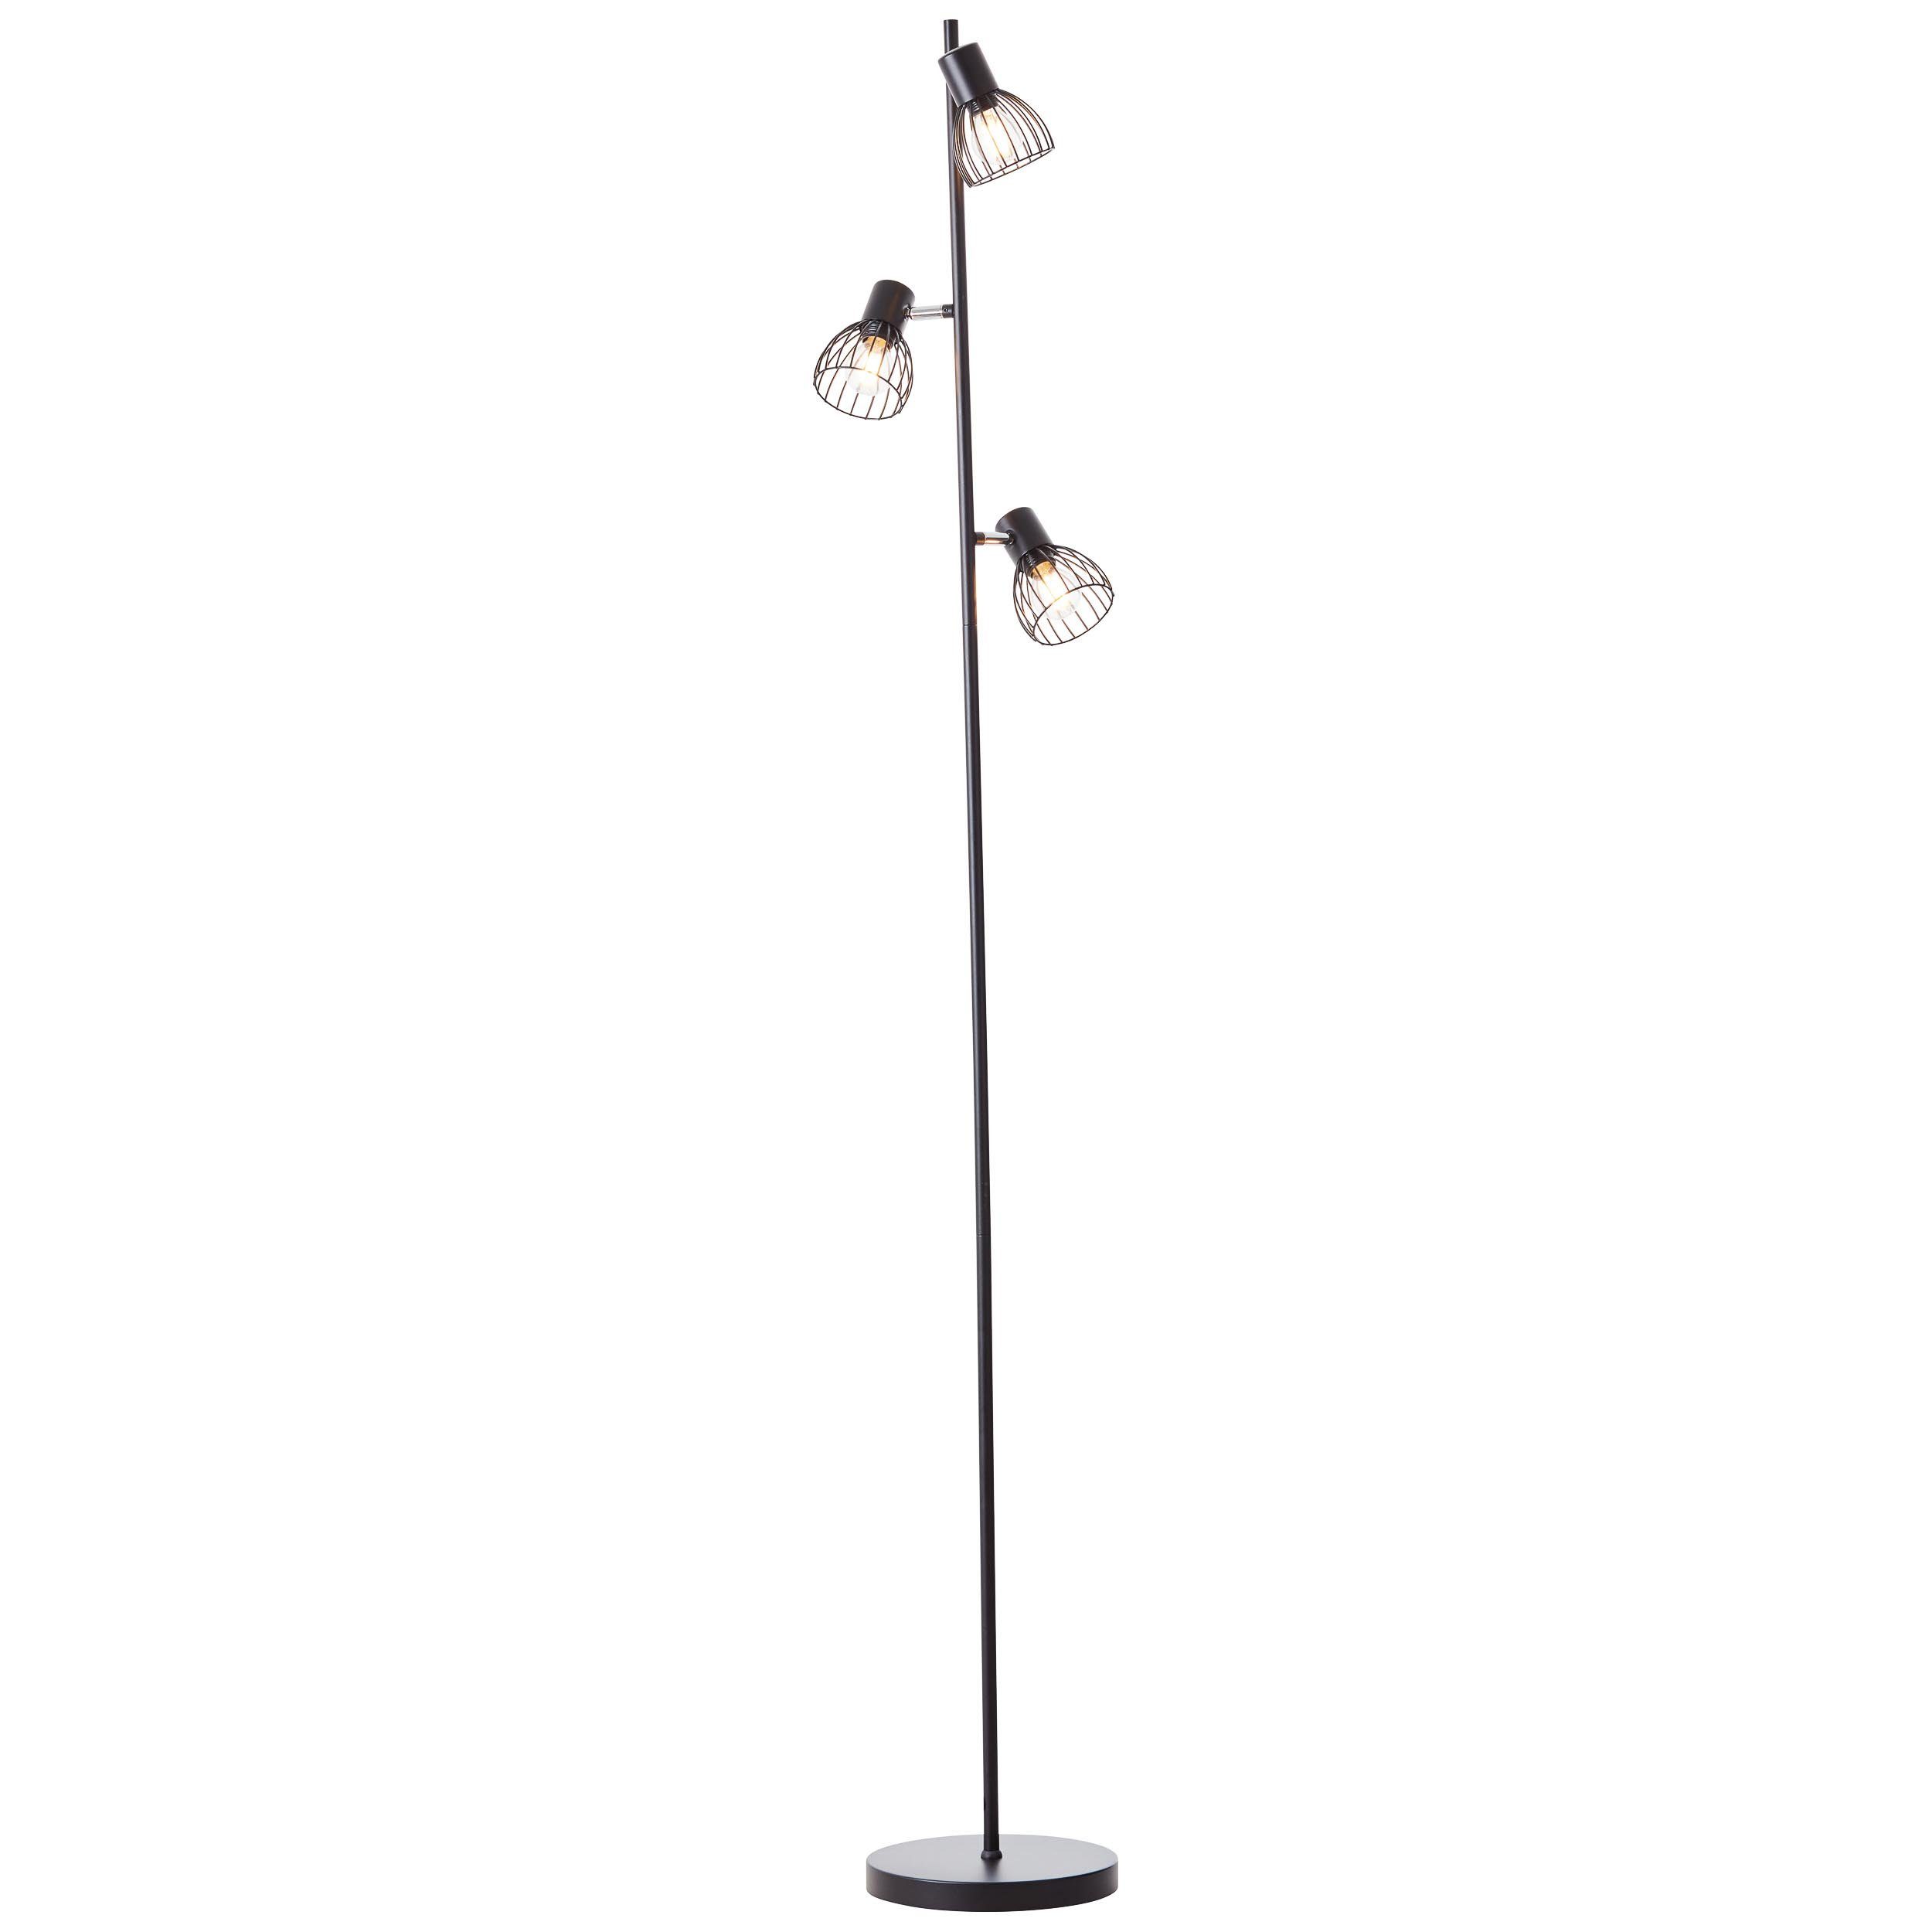 Brilliant Stehlampe Blacky, Lampe, Standleuchte Blacky D45, 25W, Mit 3flg Fu matt, 3x schwarz E14